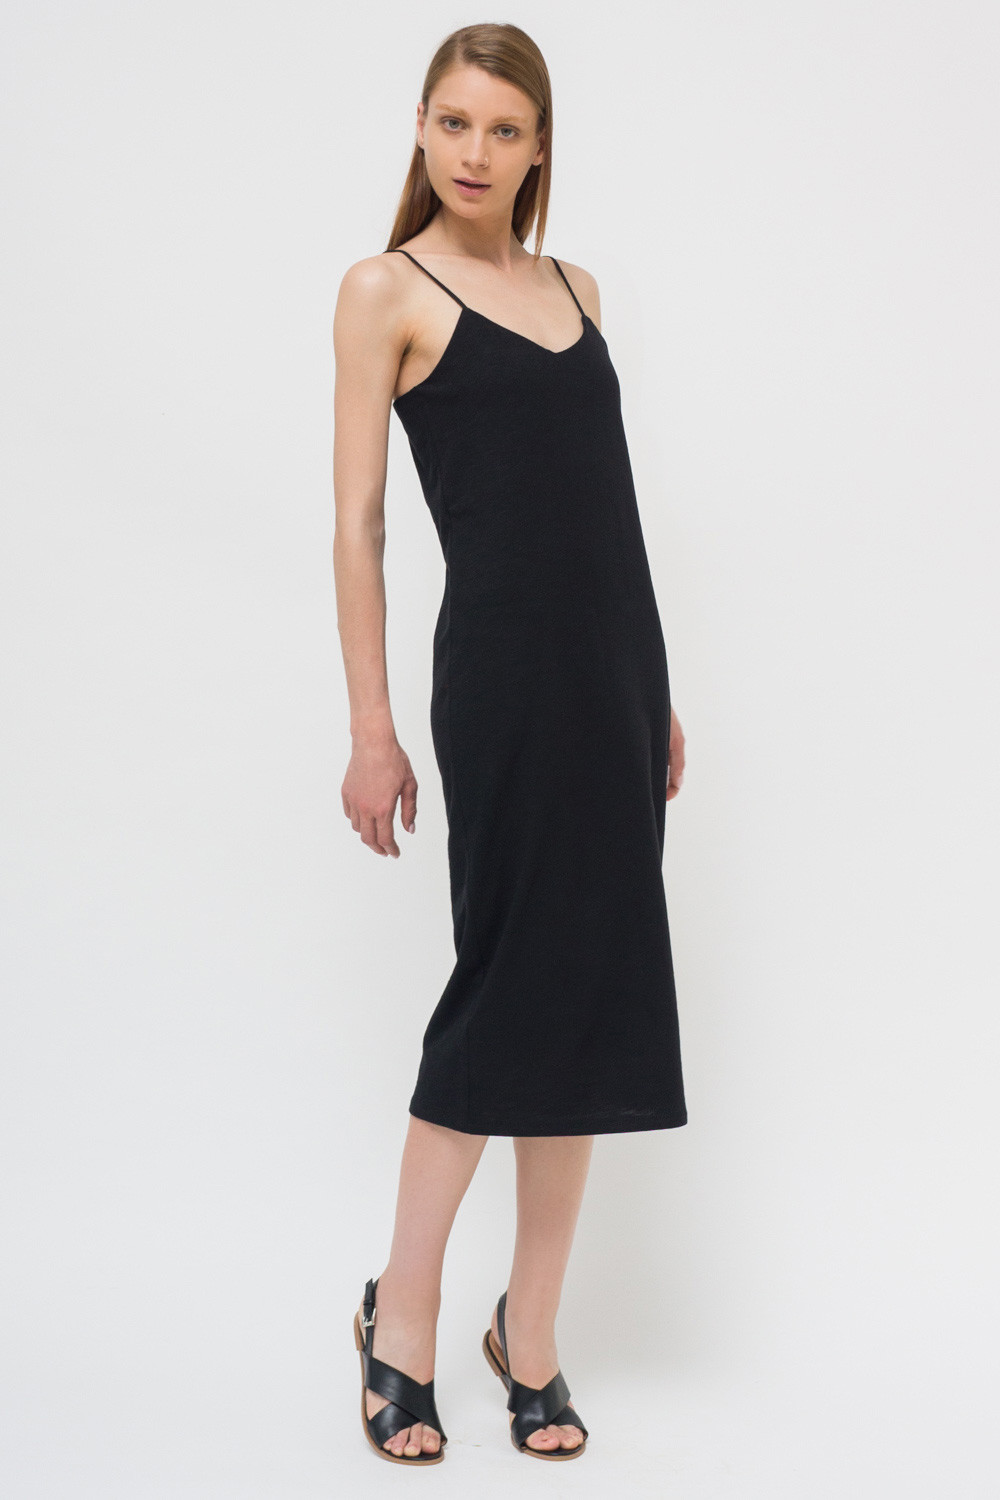 vathos_slip_dress_black_ozon_boutique-5